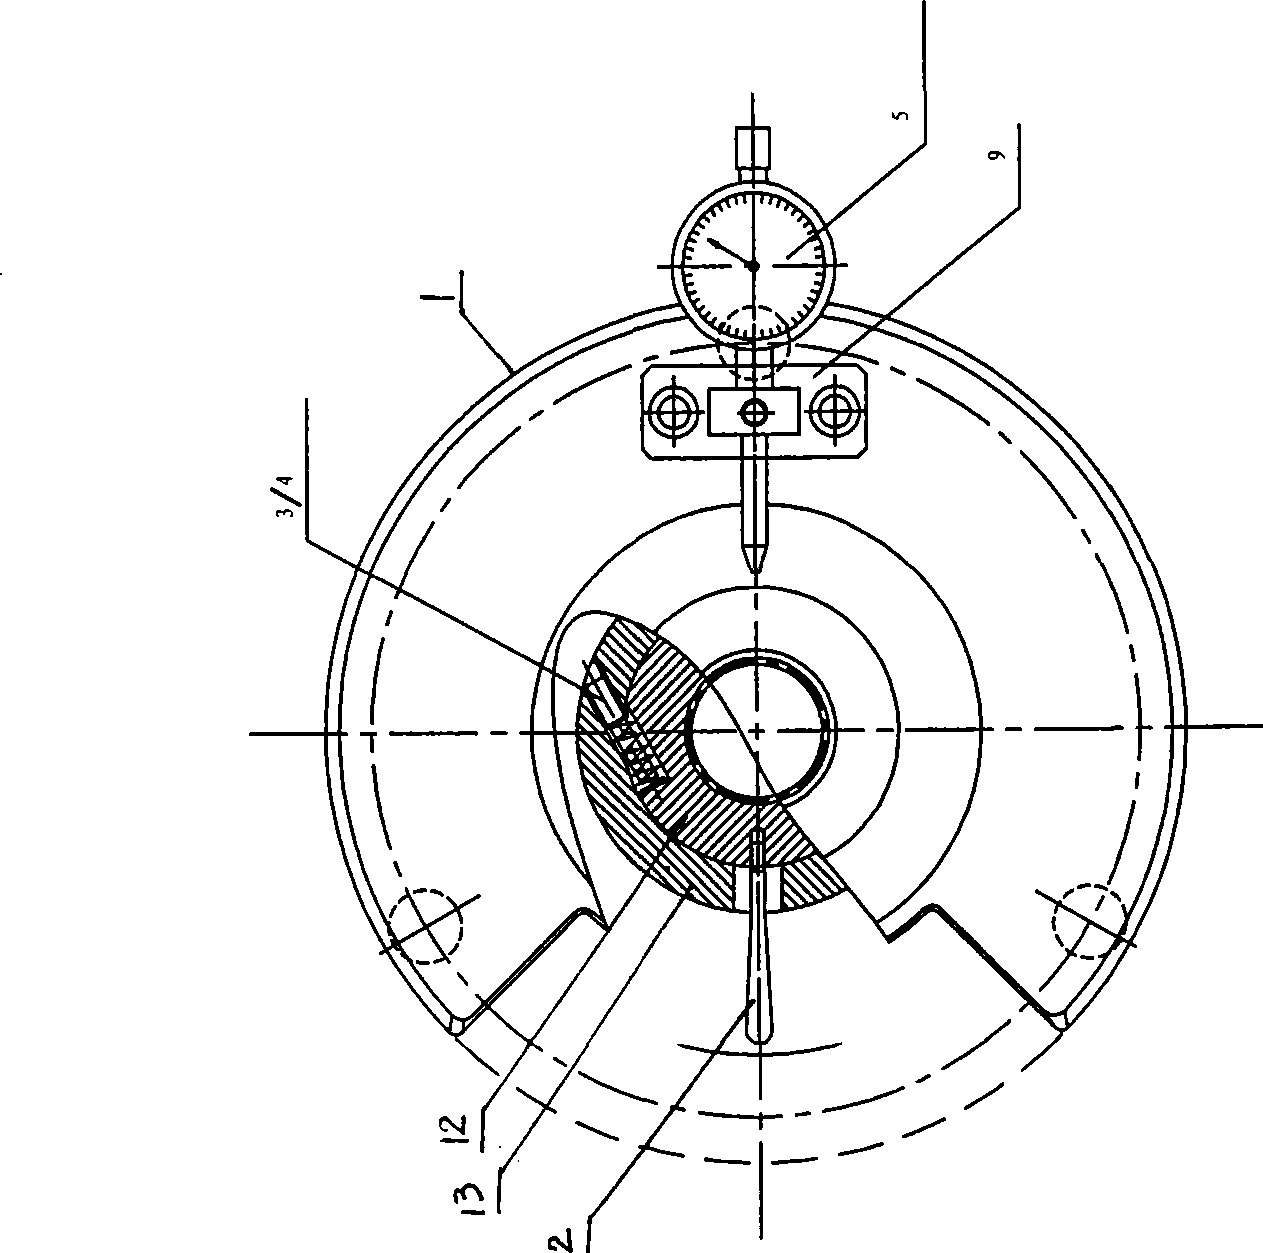 Radial pulsation measurement instrument for external spline gear ring